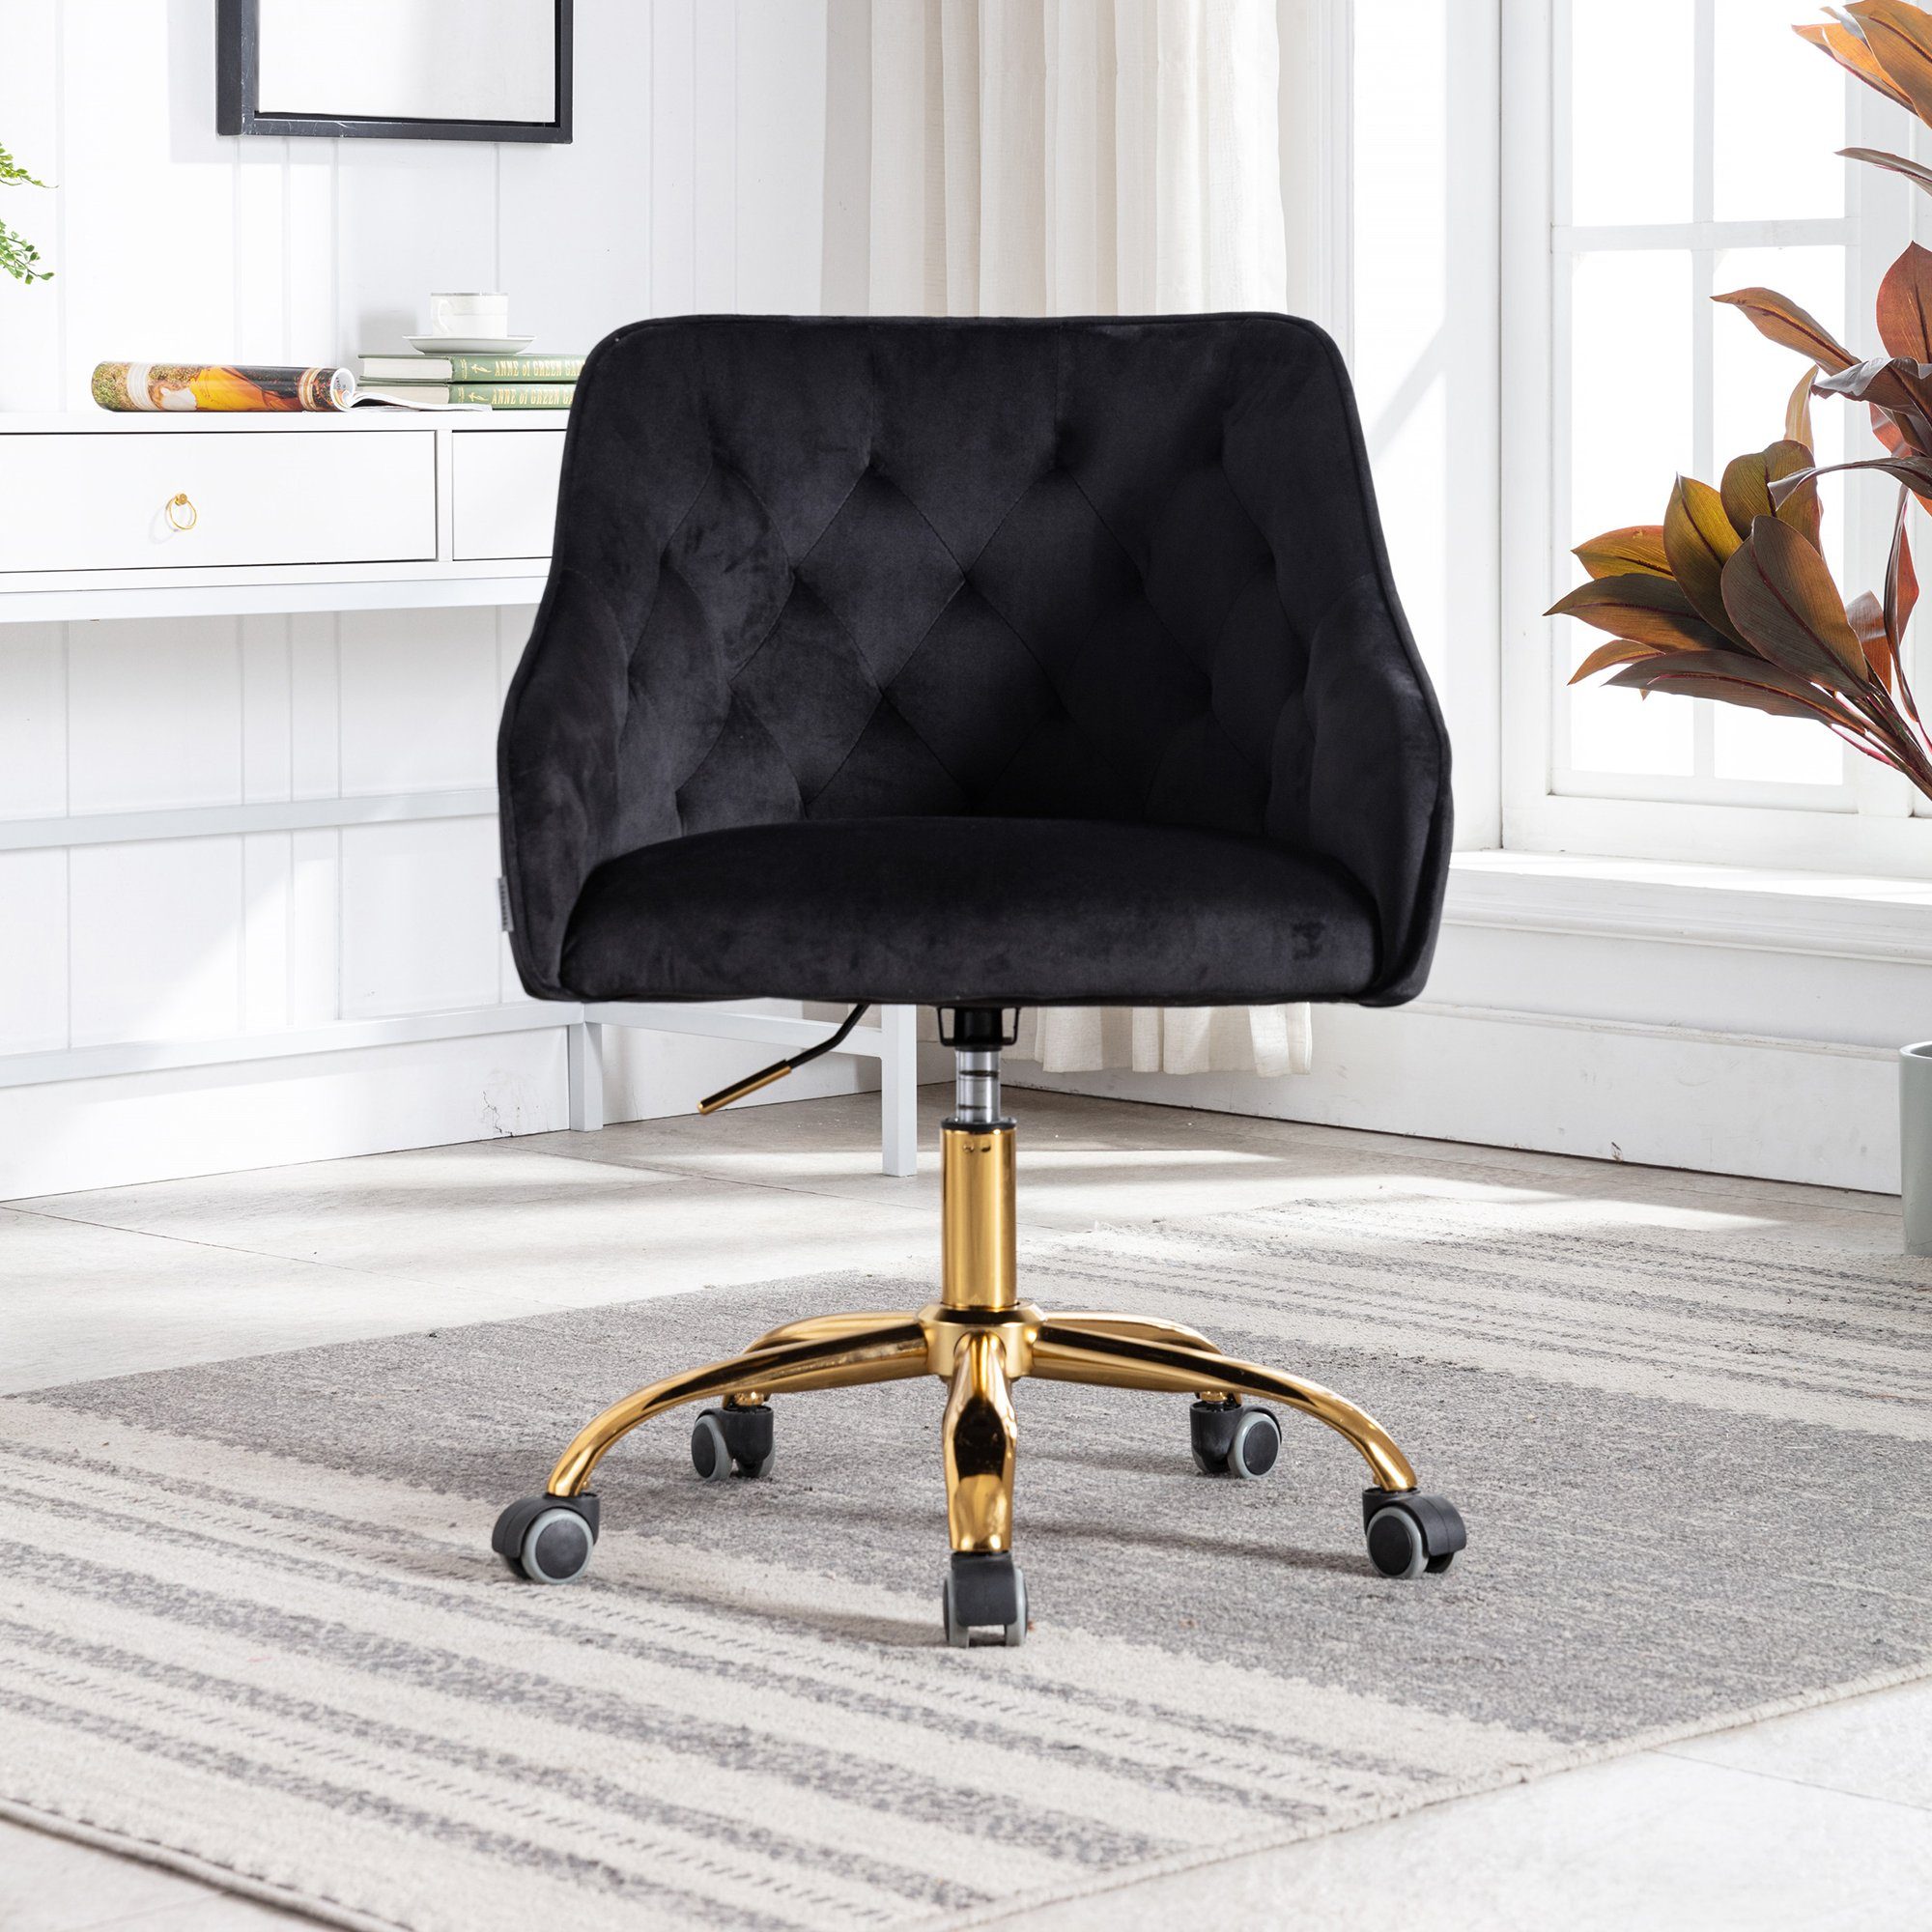 REDOM Stuhl Samt Bürostuhl, Schminkstuhl, 360° drehbar, höhenverstellbar (hübscher schicker Stuhl, goldener Bürostuhl), hübscher schicker Stuhl, goldener Bürostuhl schwarz